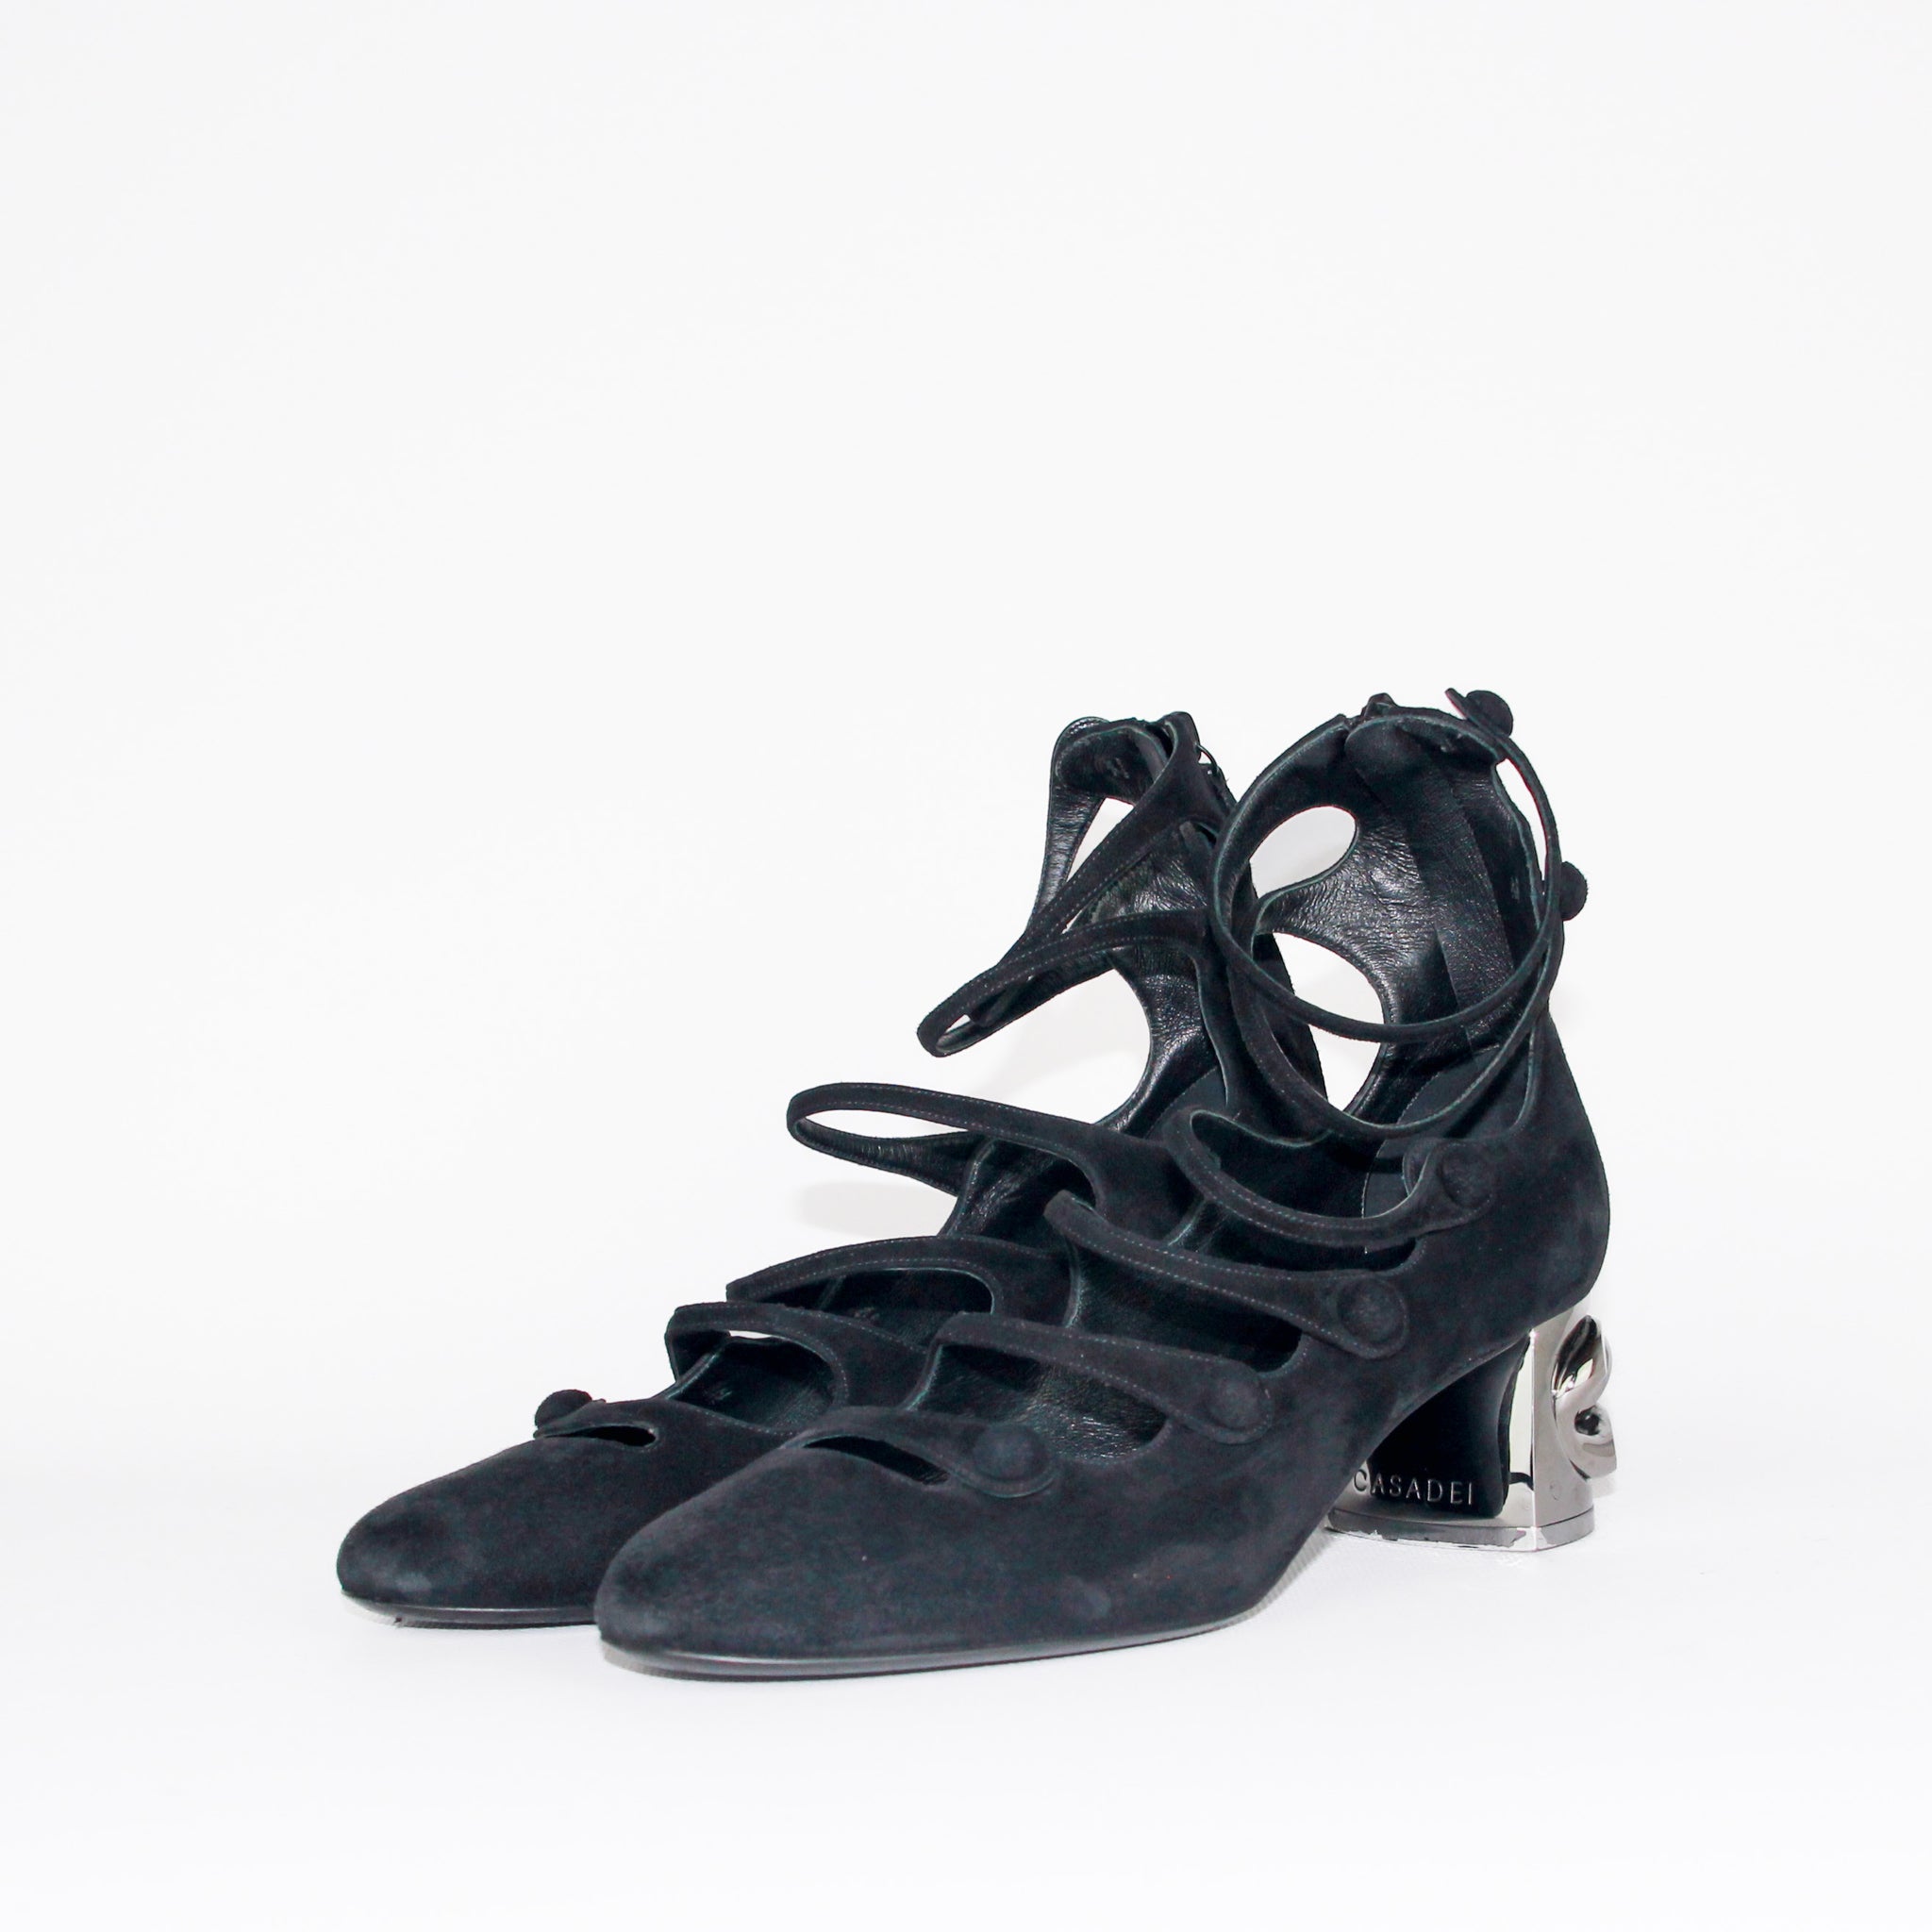 CASADEI escarpins pumps cuir suède suede leather noir black  bride straps chaussures de luxe de seconde main the tiger twist annecy cordonnerie